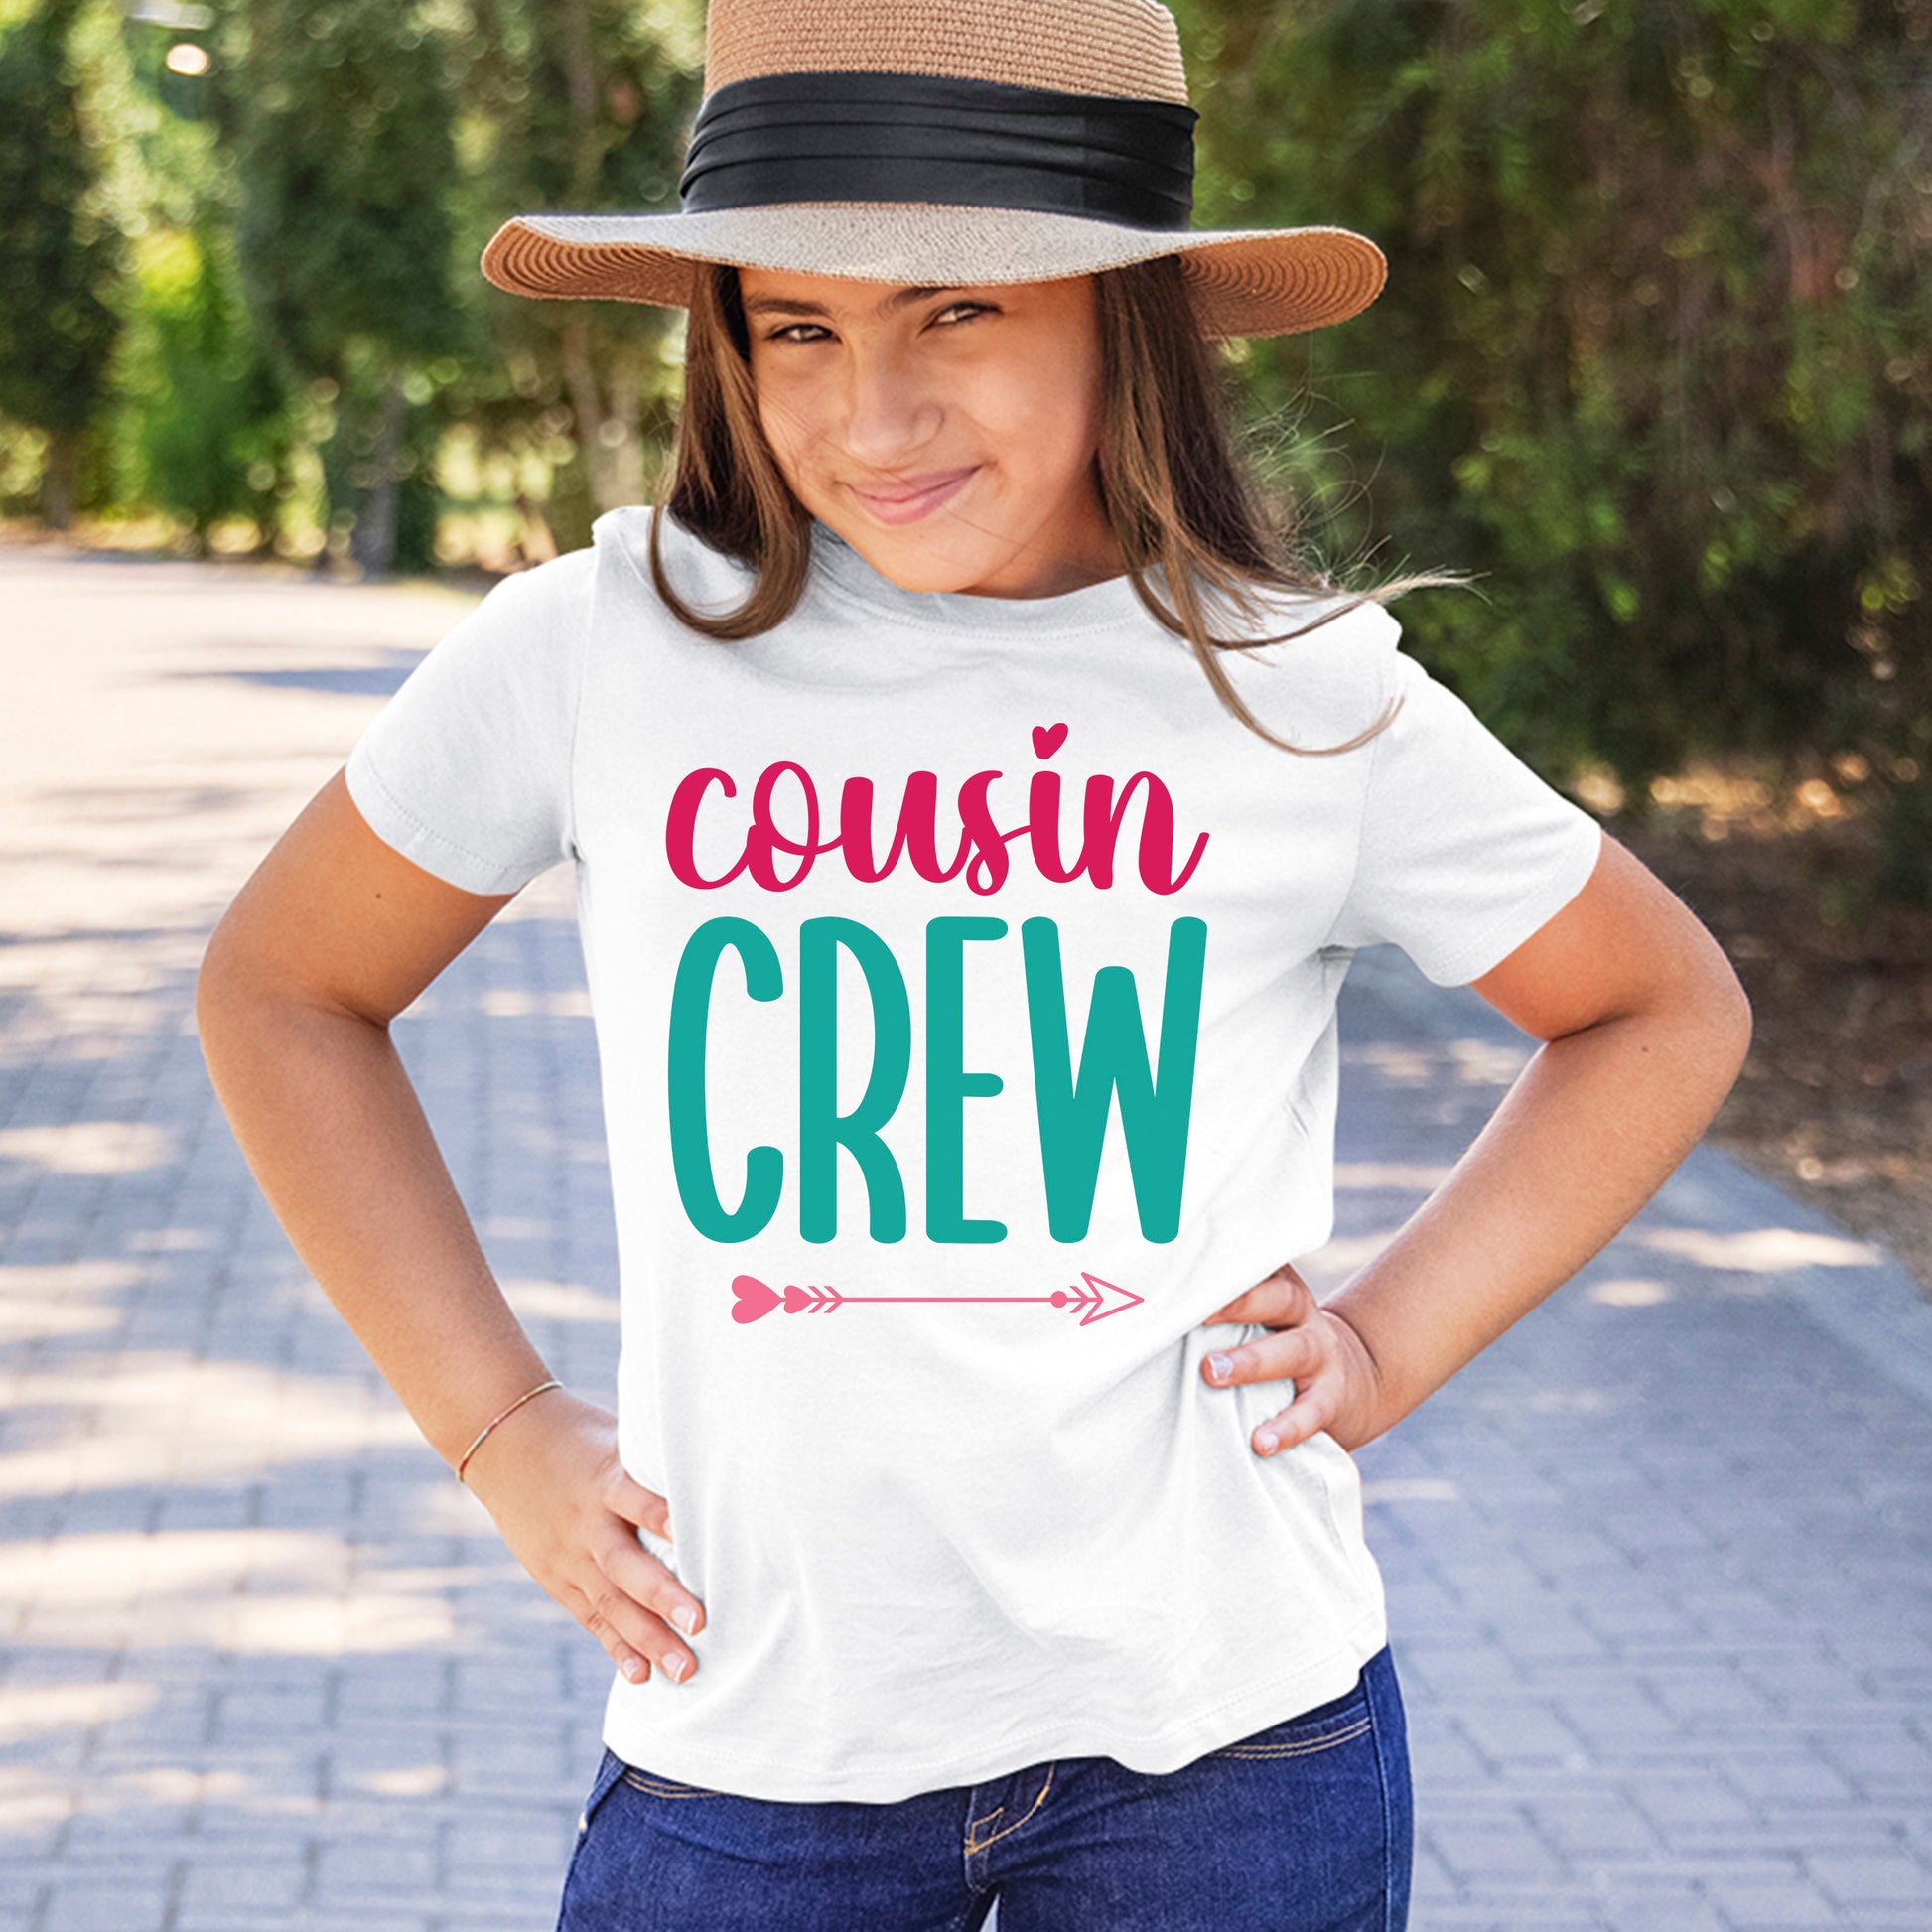 Groovy Cousin Crew T-Shirt